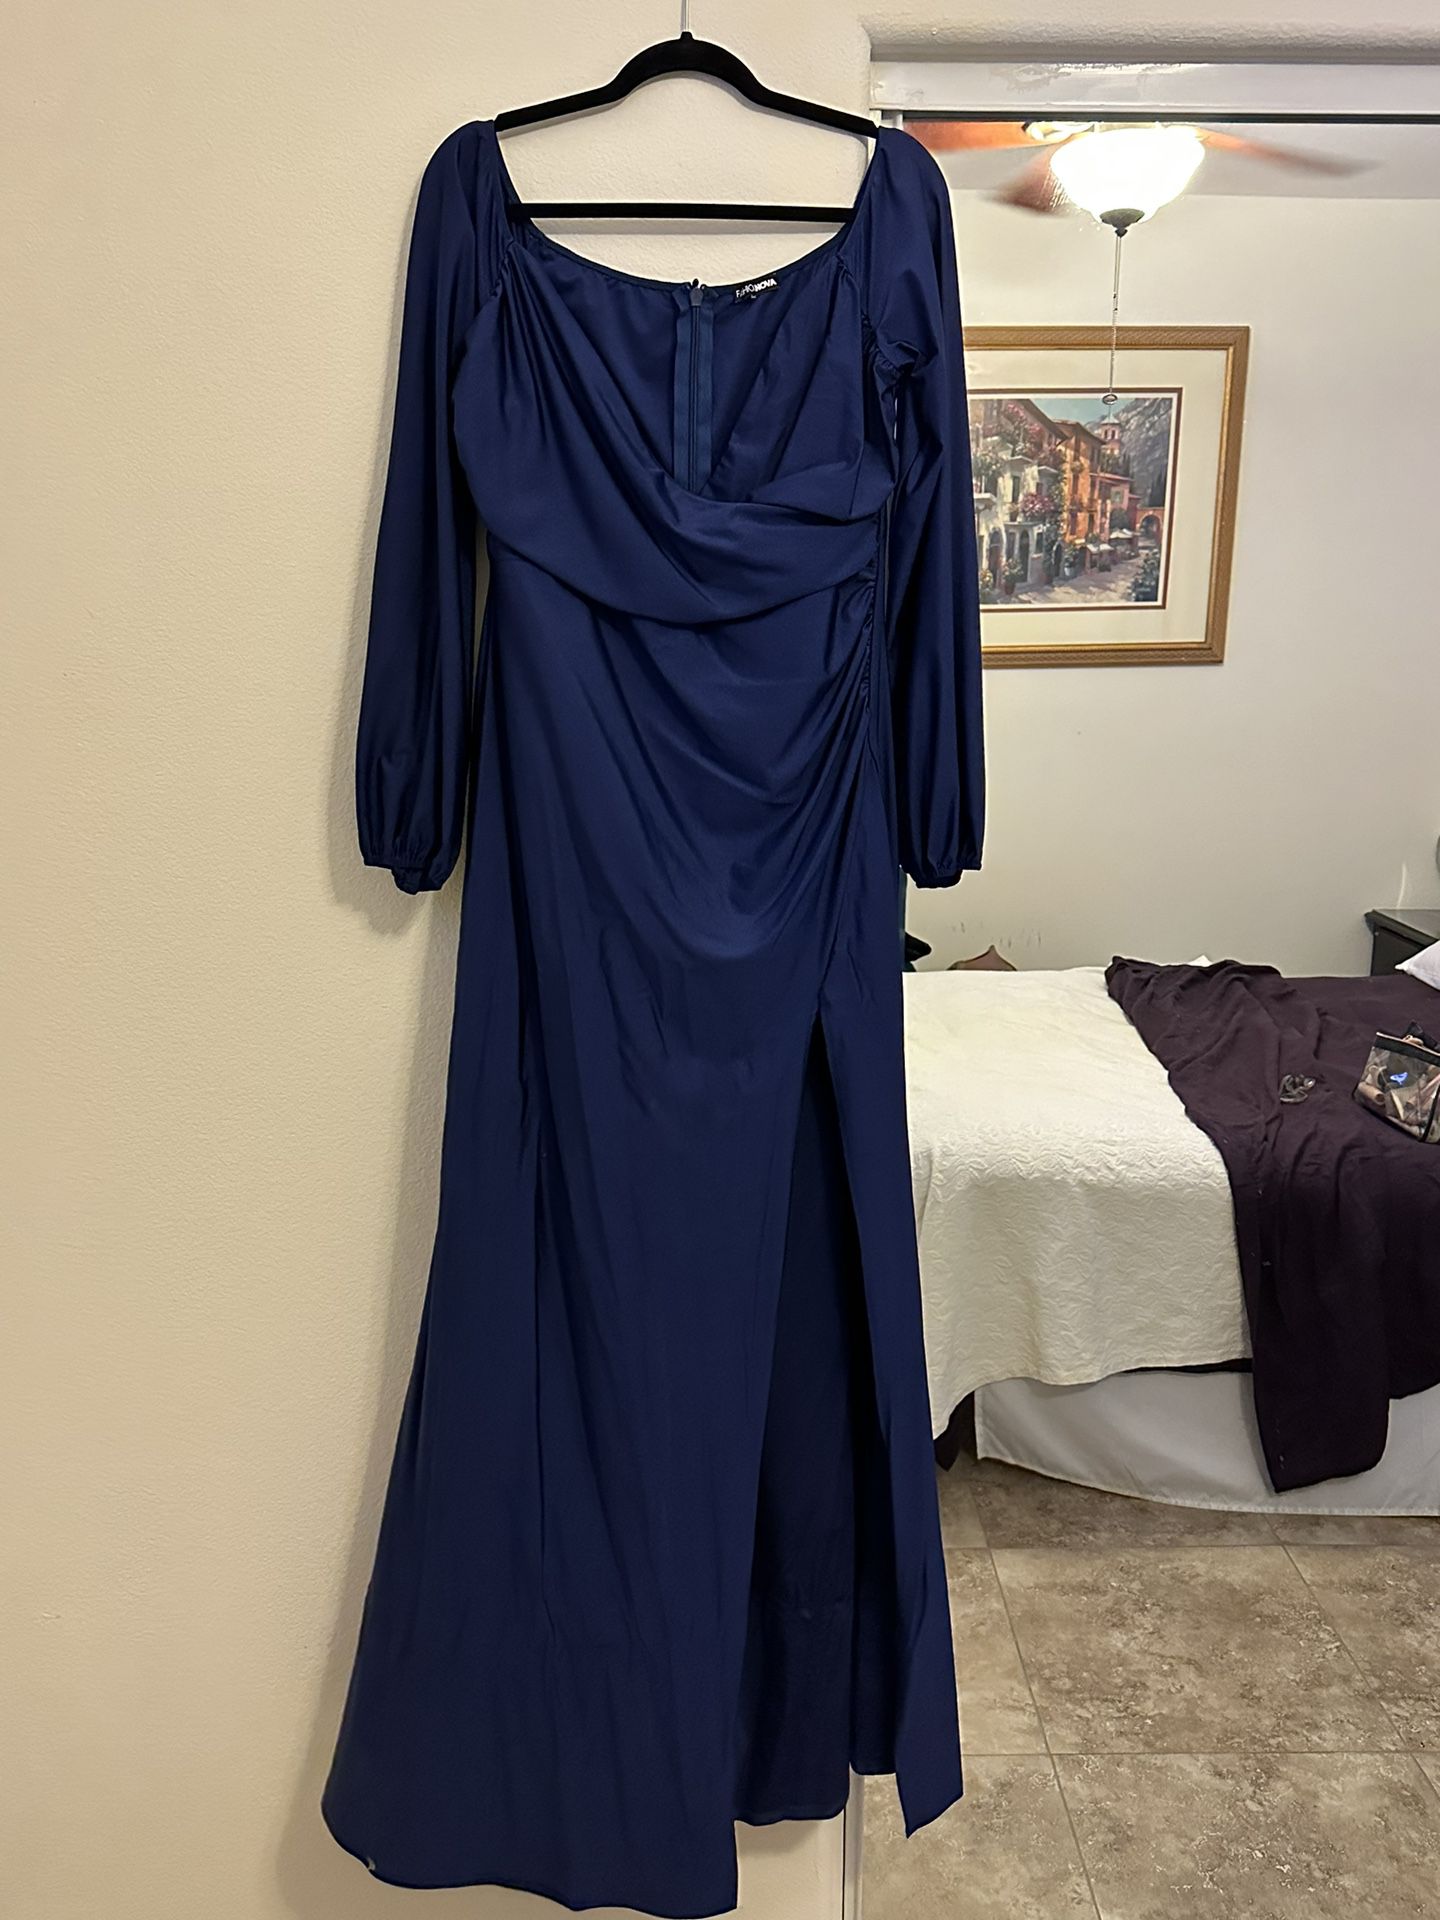 Navy Blue Dress 